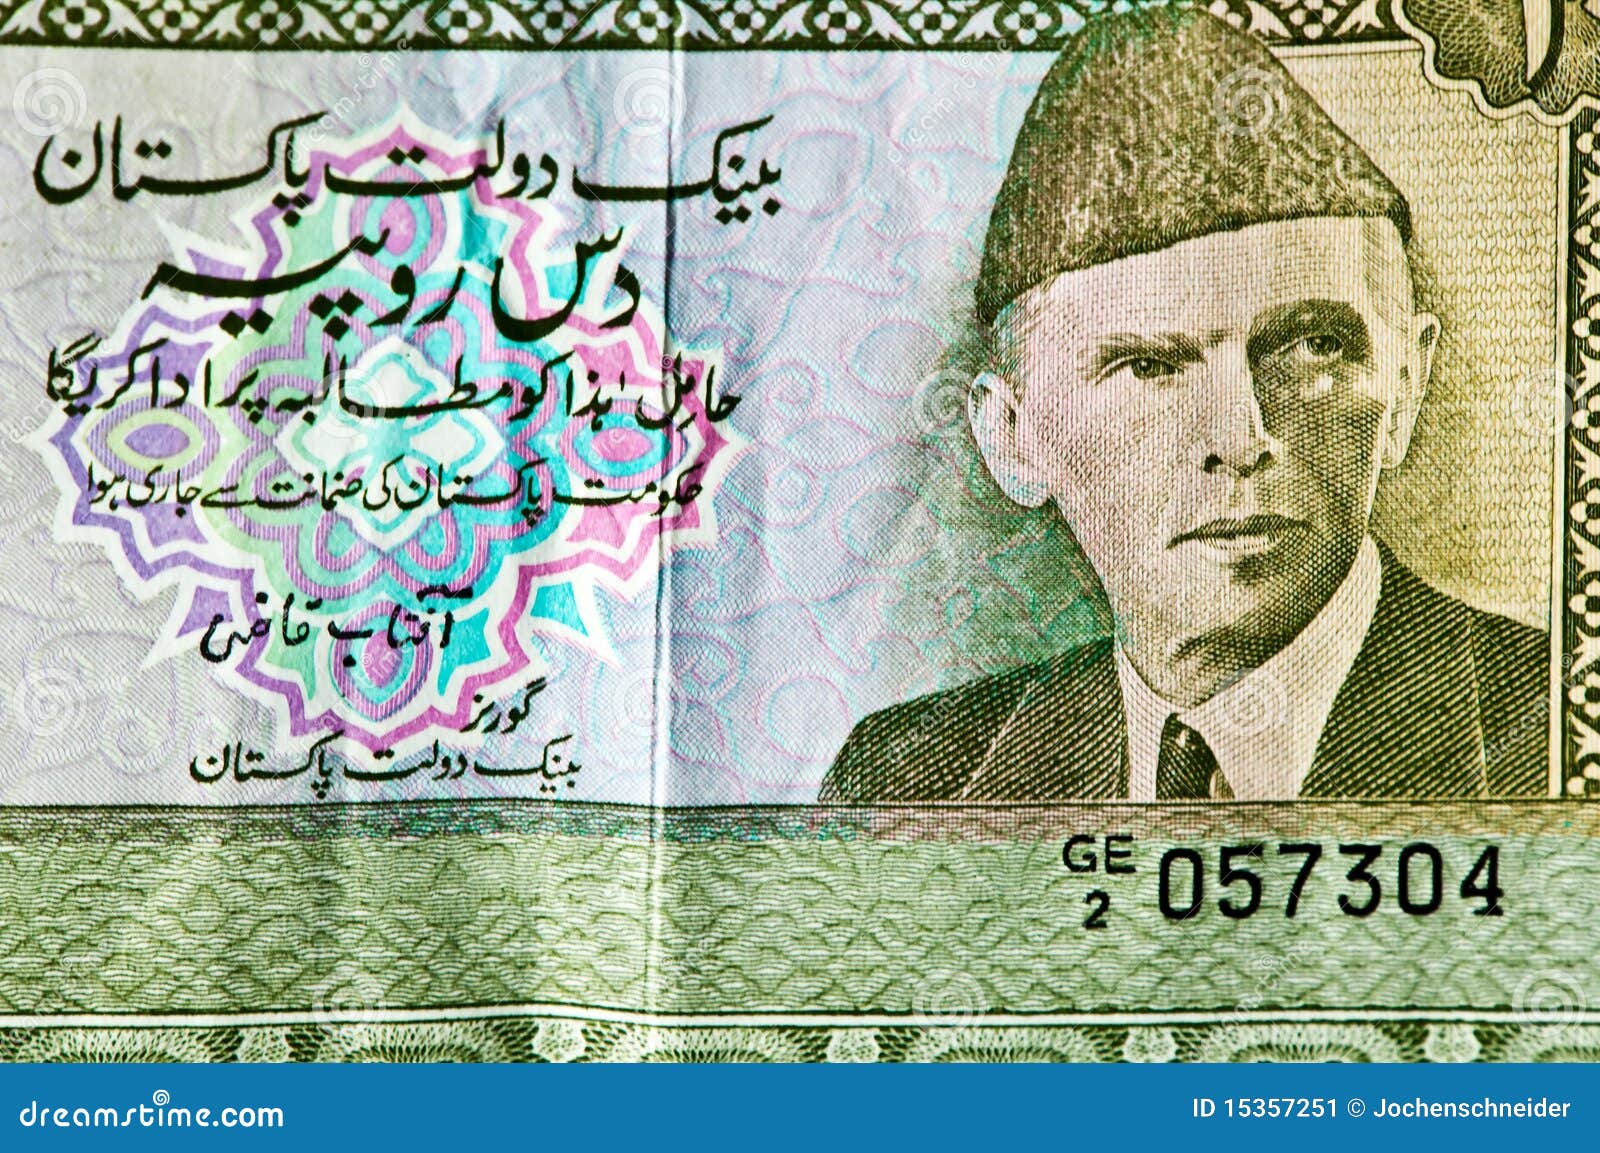 Pakistan real cash app download